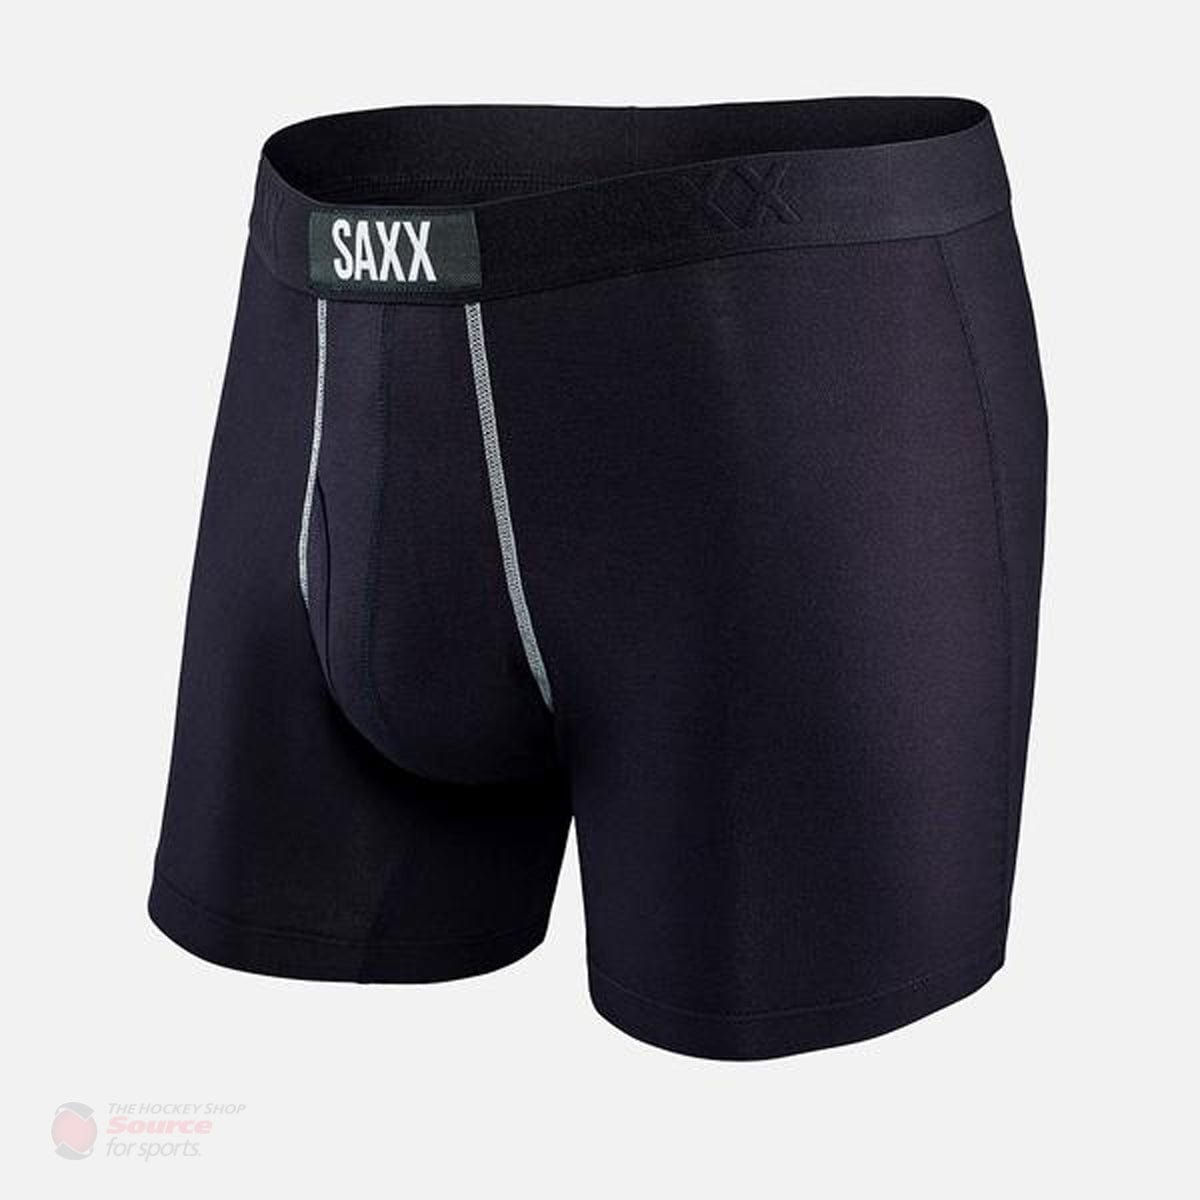 Saxx Ultra Boxers - Black